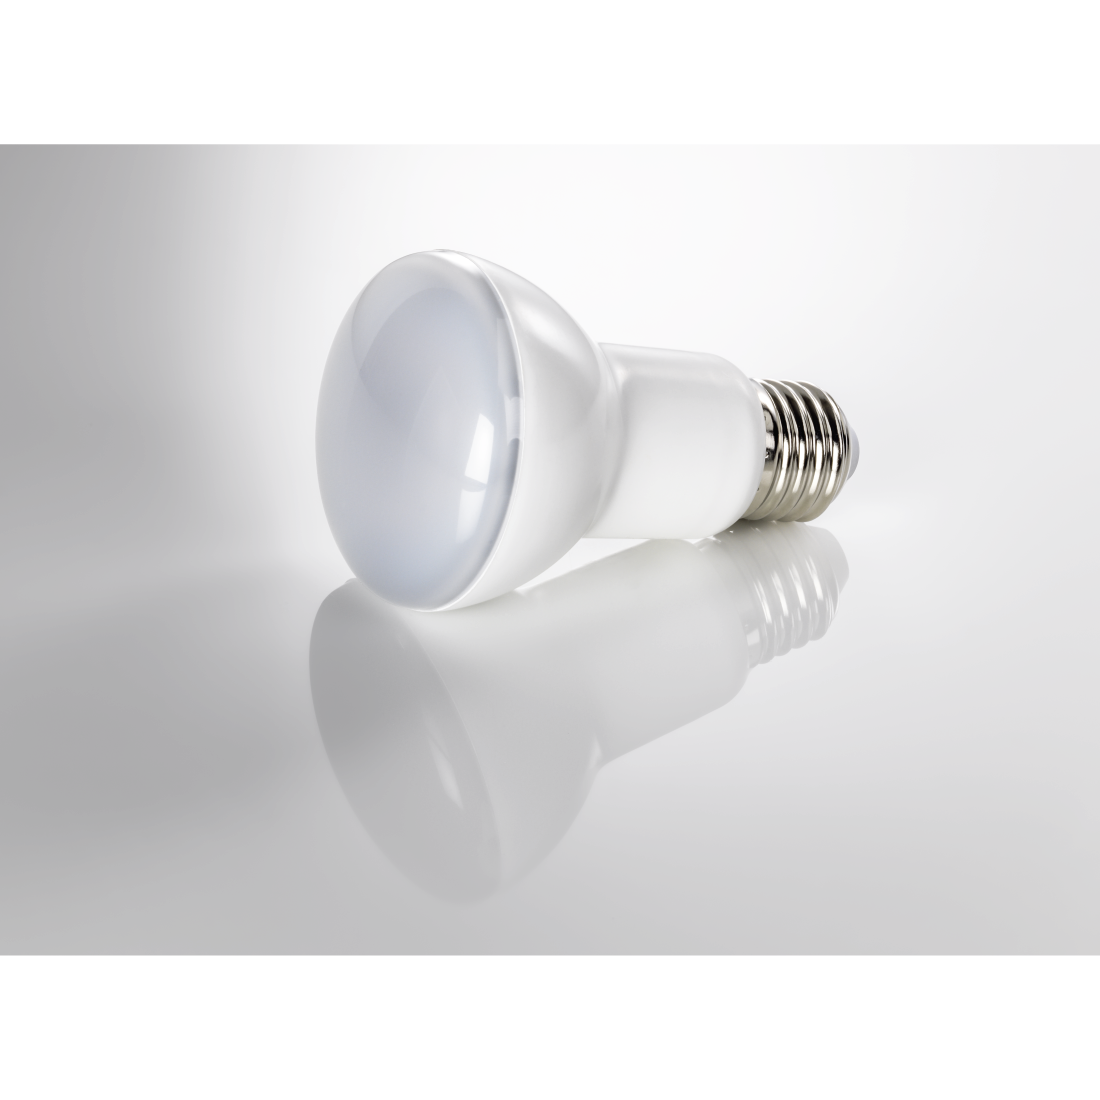 abx3 Druckfähige Abbildung 3 - Xavax, LED-Lampe, E27, 530lm ersetzt 45W, Reflektorlampe R63, Warmweiß